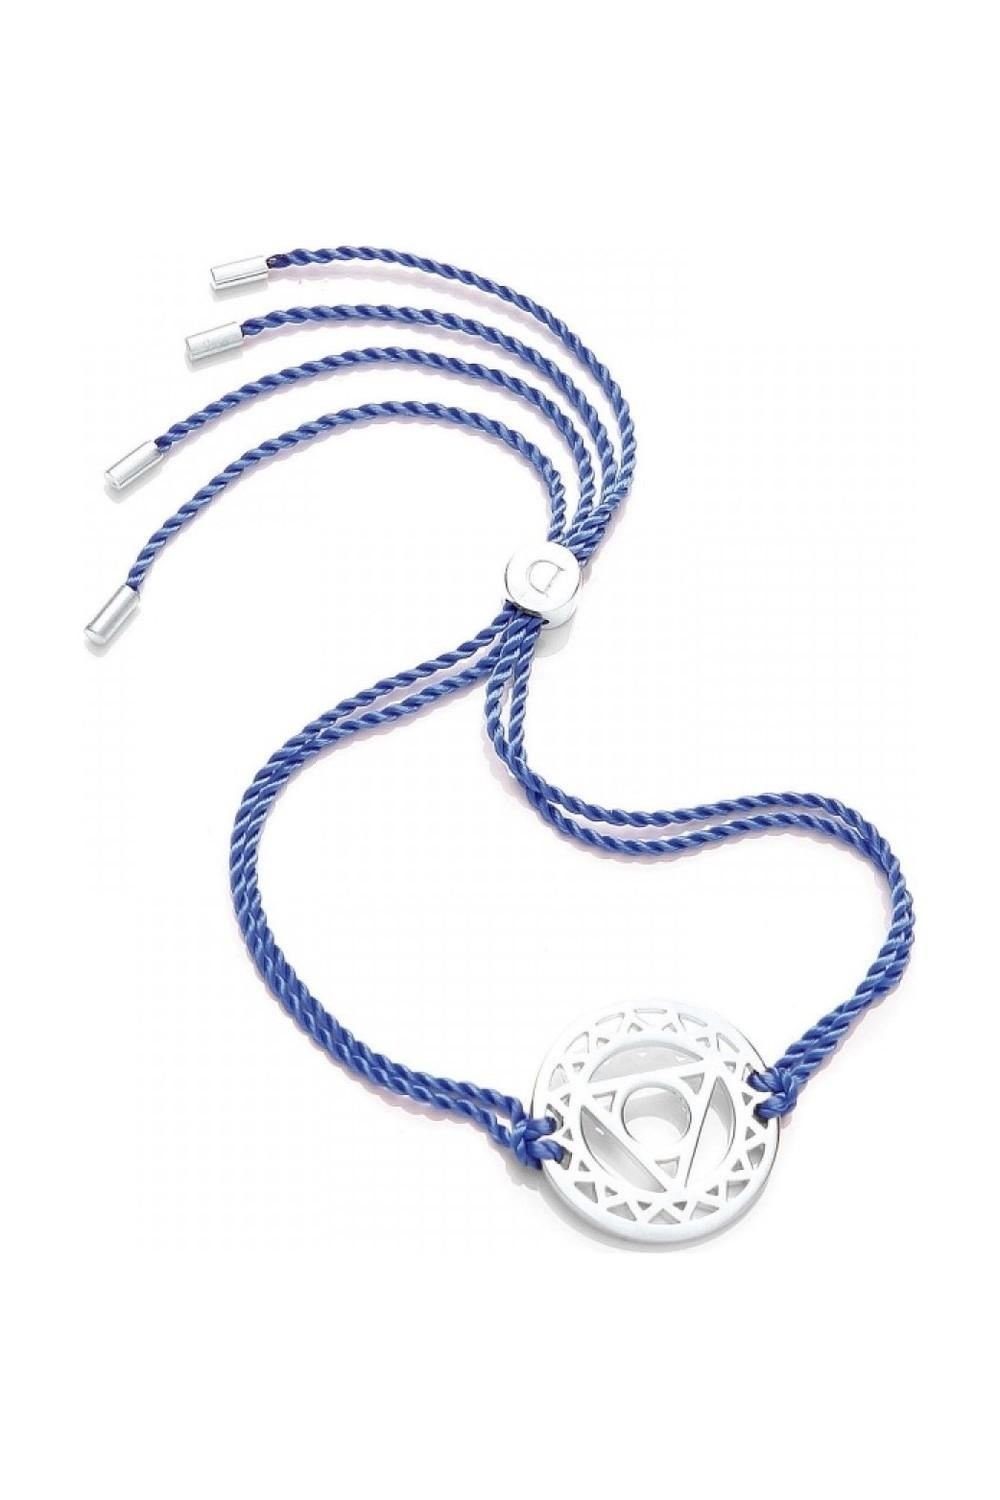 Daisy London Armband Silver Throat Chakra Blue, aus 925er Sterling-Silber und Textil, Zugband, Blau